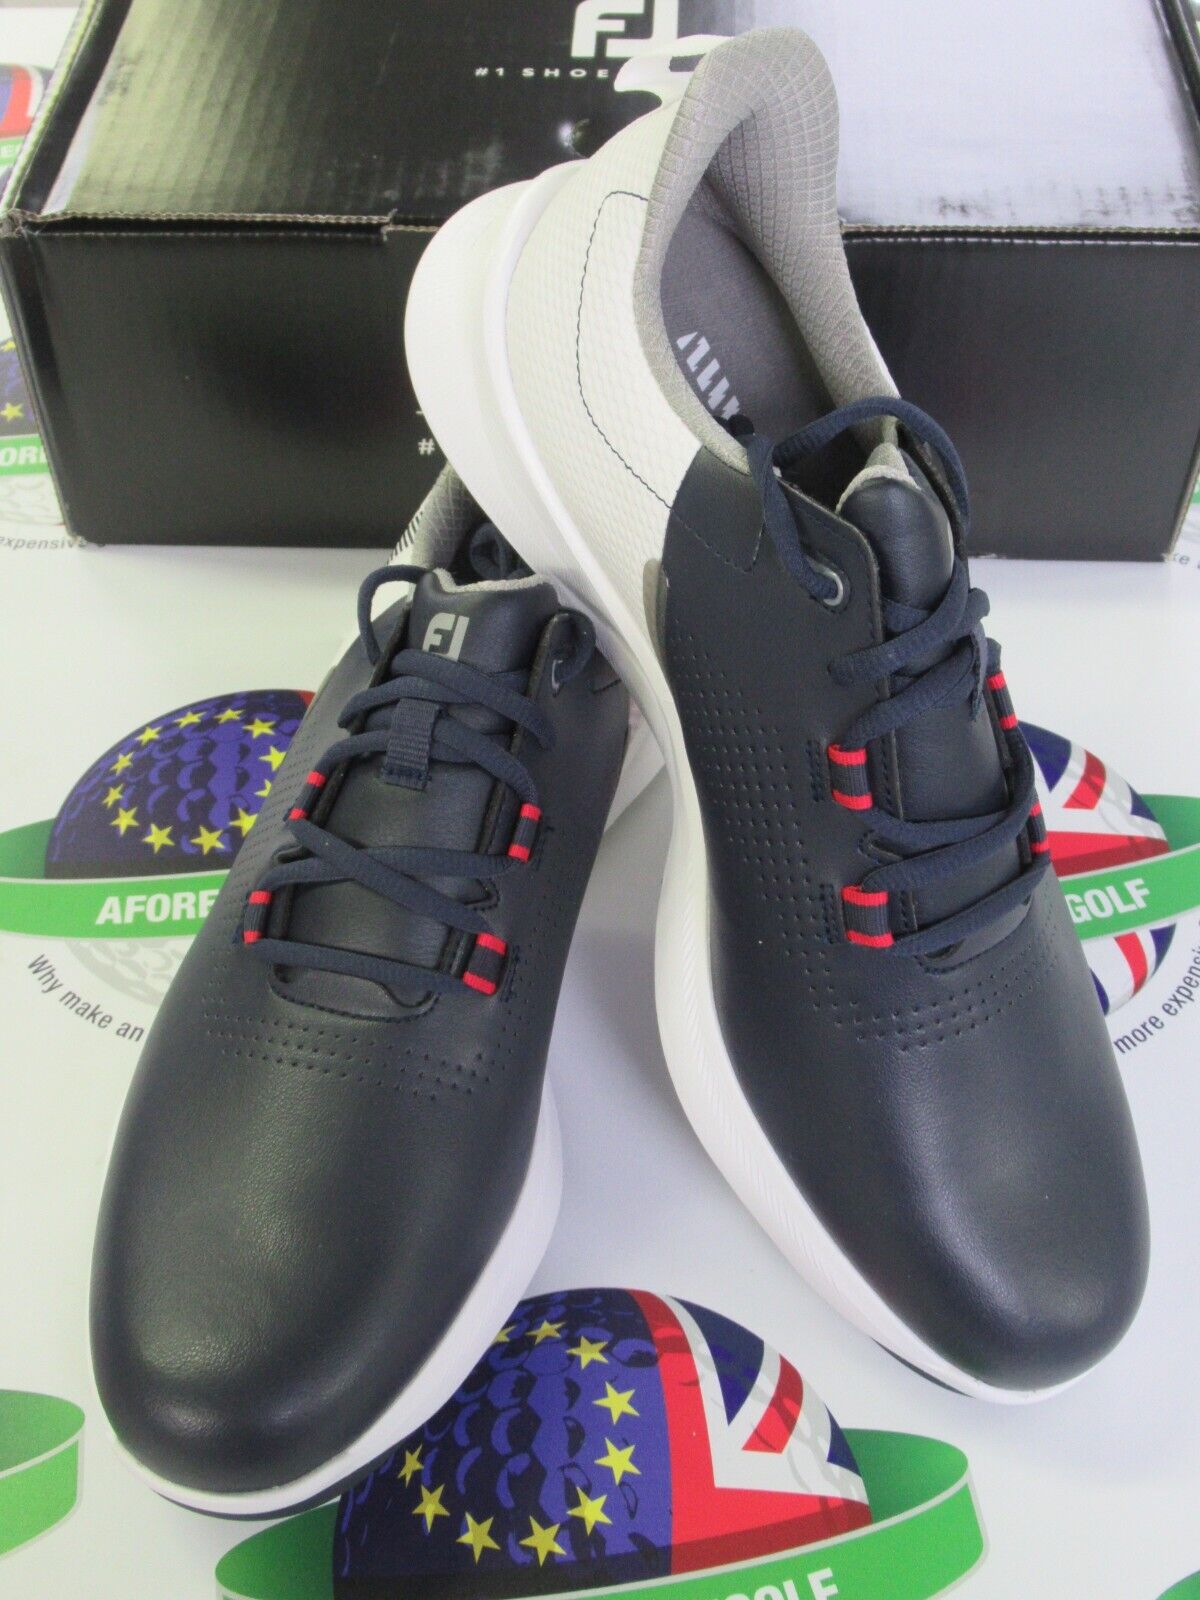 footjoy fj fuel waterproof golf shoes 55442k navy/white uk size 8 medium